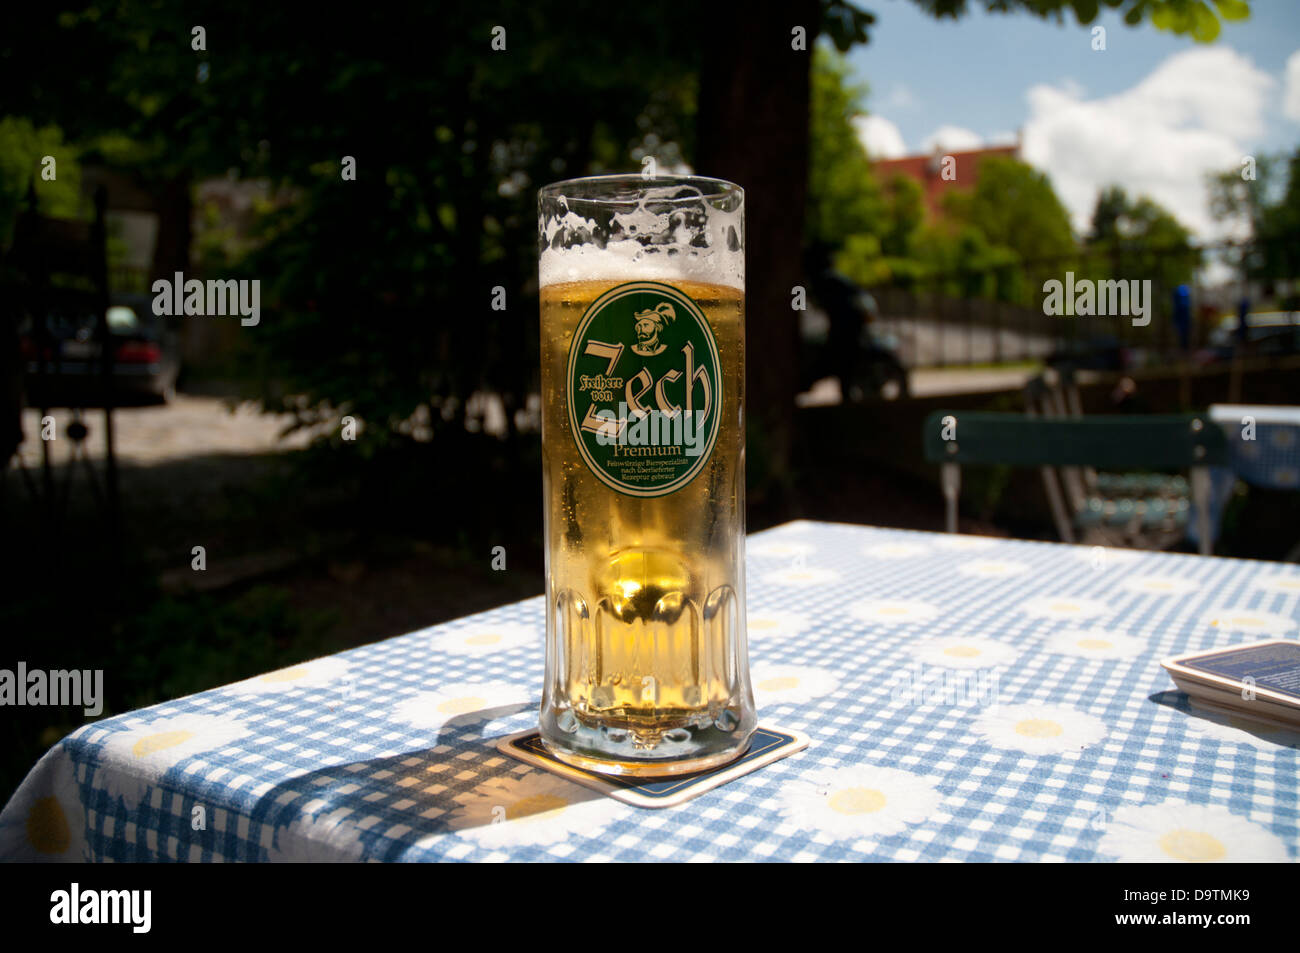 Mezzo litro di birra Zech di Landsberg, Germania Foto Stock